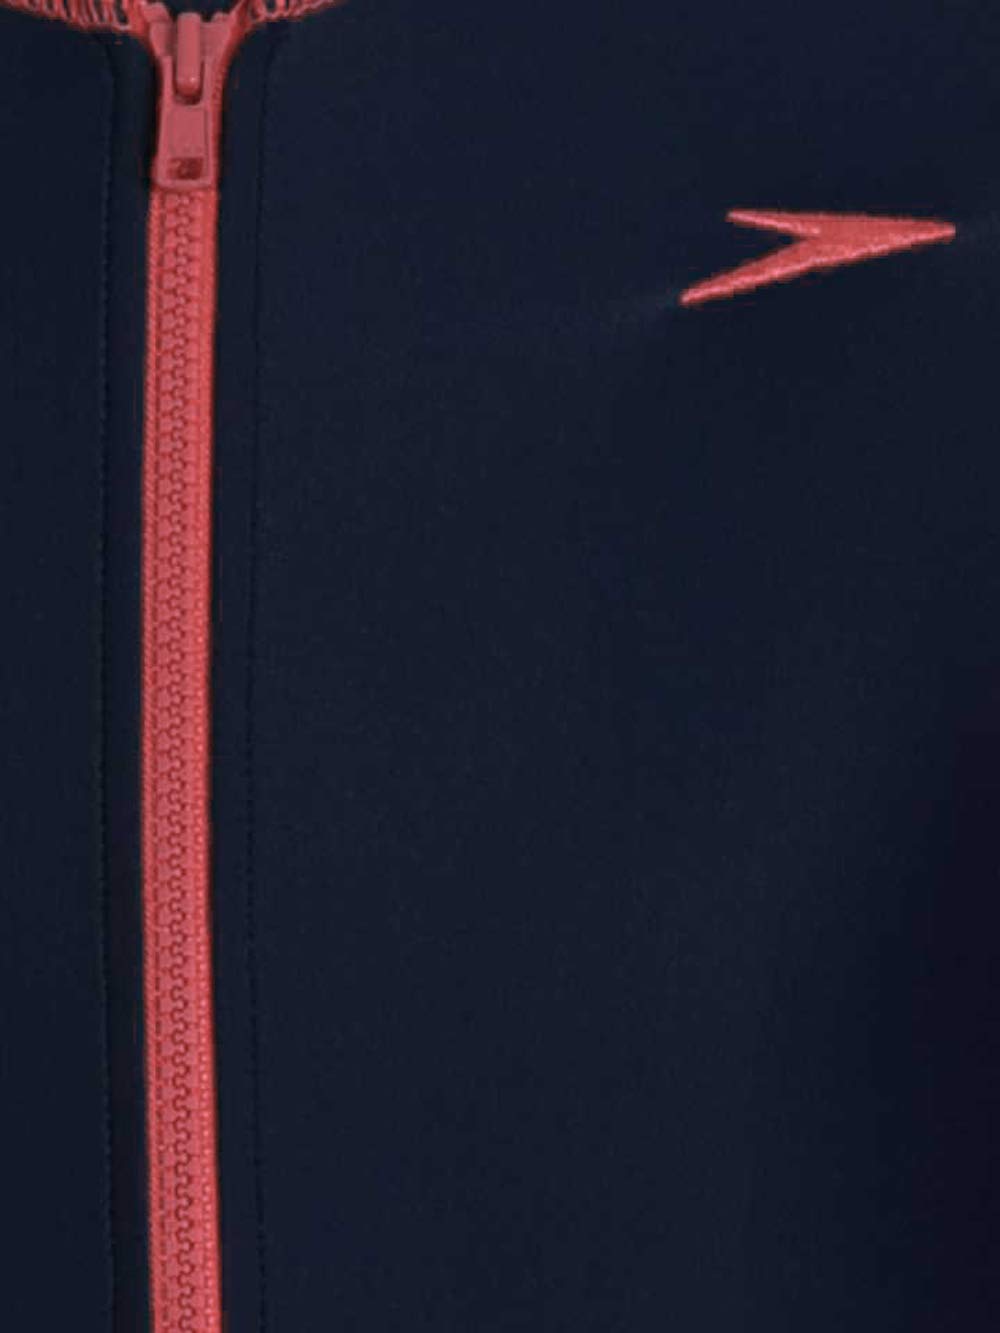 Speedo Girl's Swimwear Color Block All-in-1 Suit -Navy/Fed Red - Best Price online Prokicksports.com